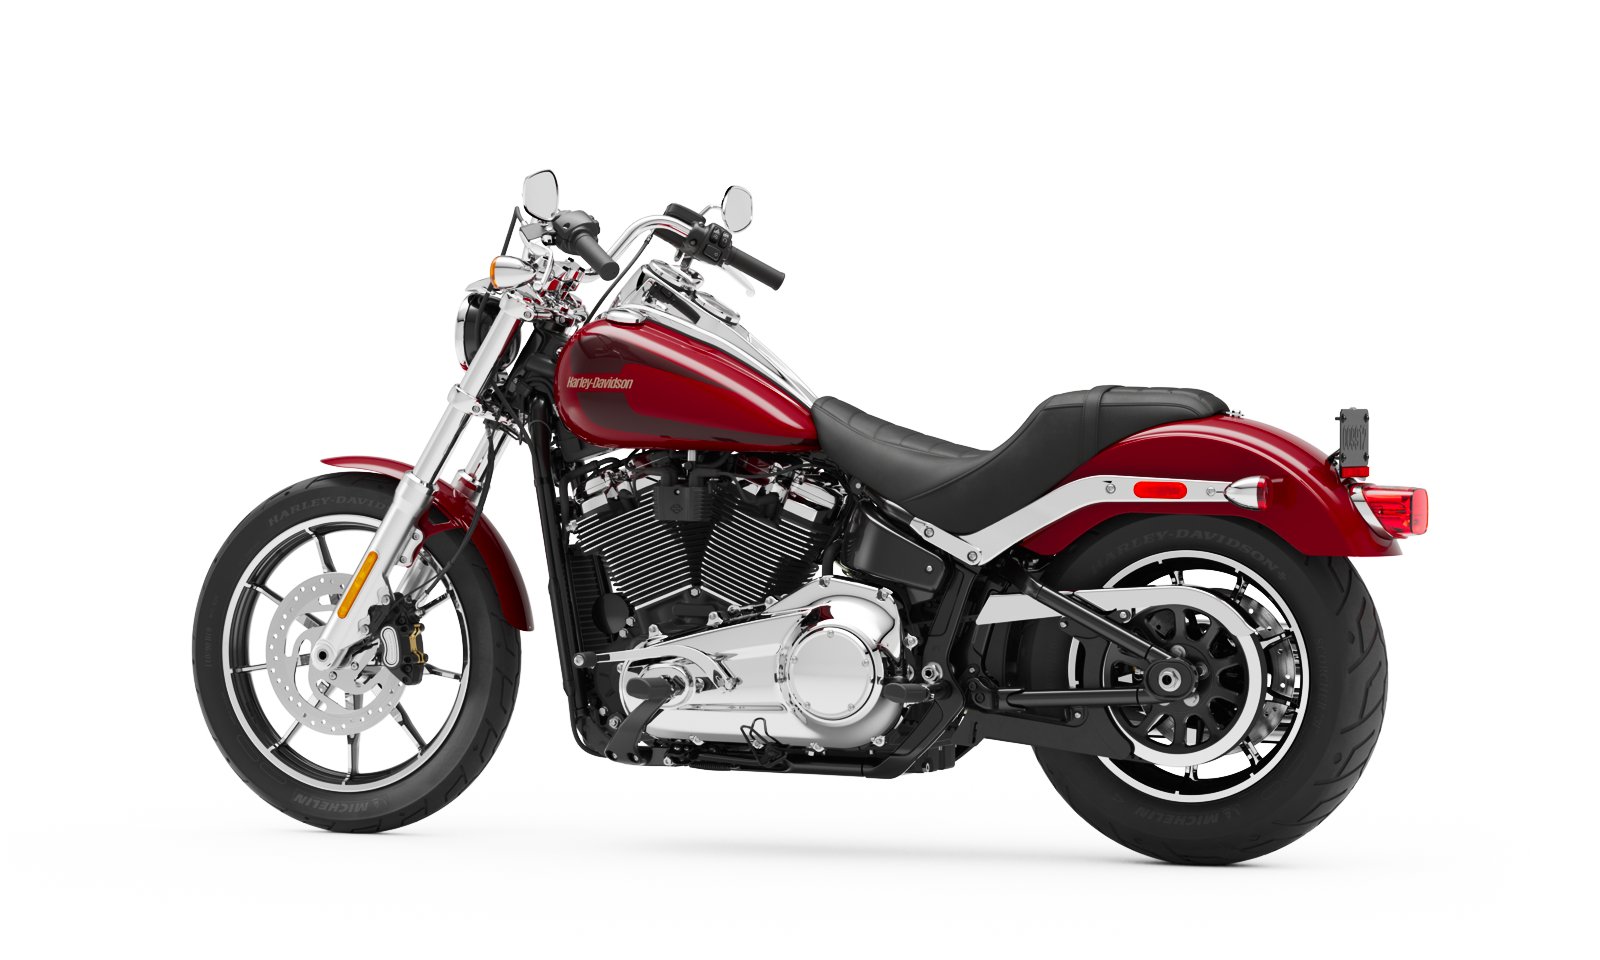 2020 Low Rider Motorcycle Harley Davidson India